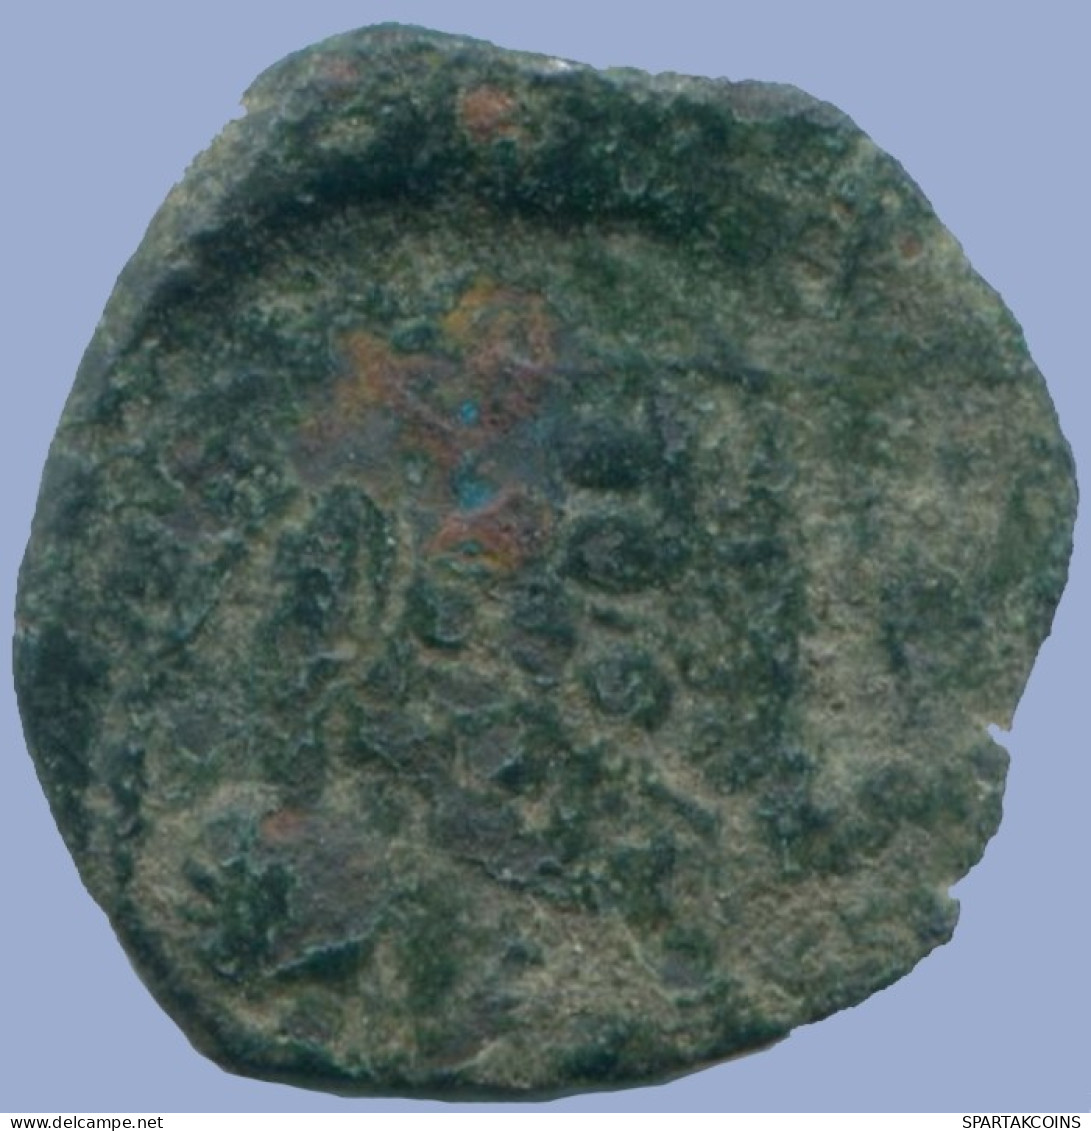 ALEXIUS I COMNENUS TETARTERON THESSALONICA 1081-1118 1.42g/16mm #ANC13658.16.D.A - Byzantine